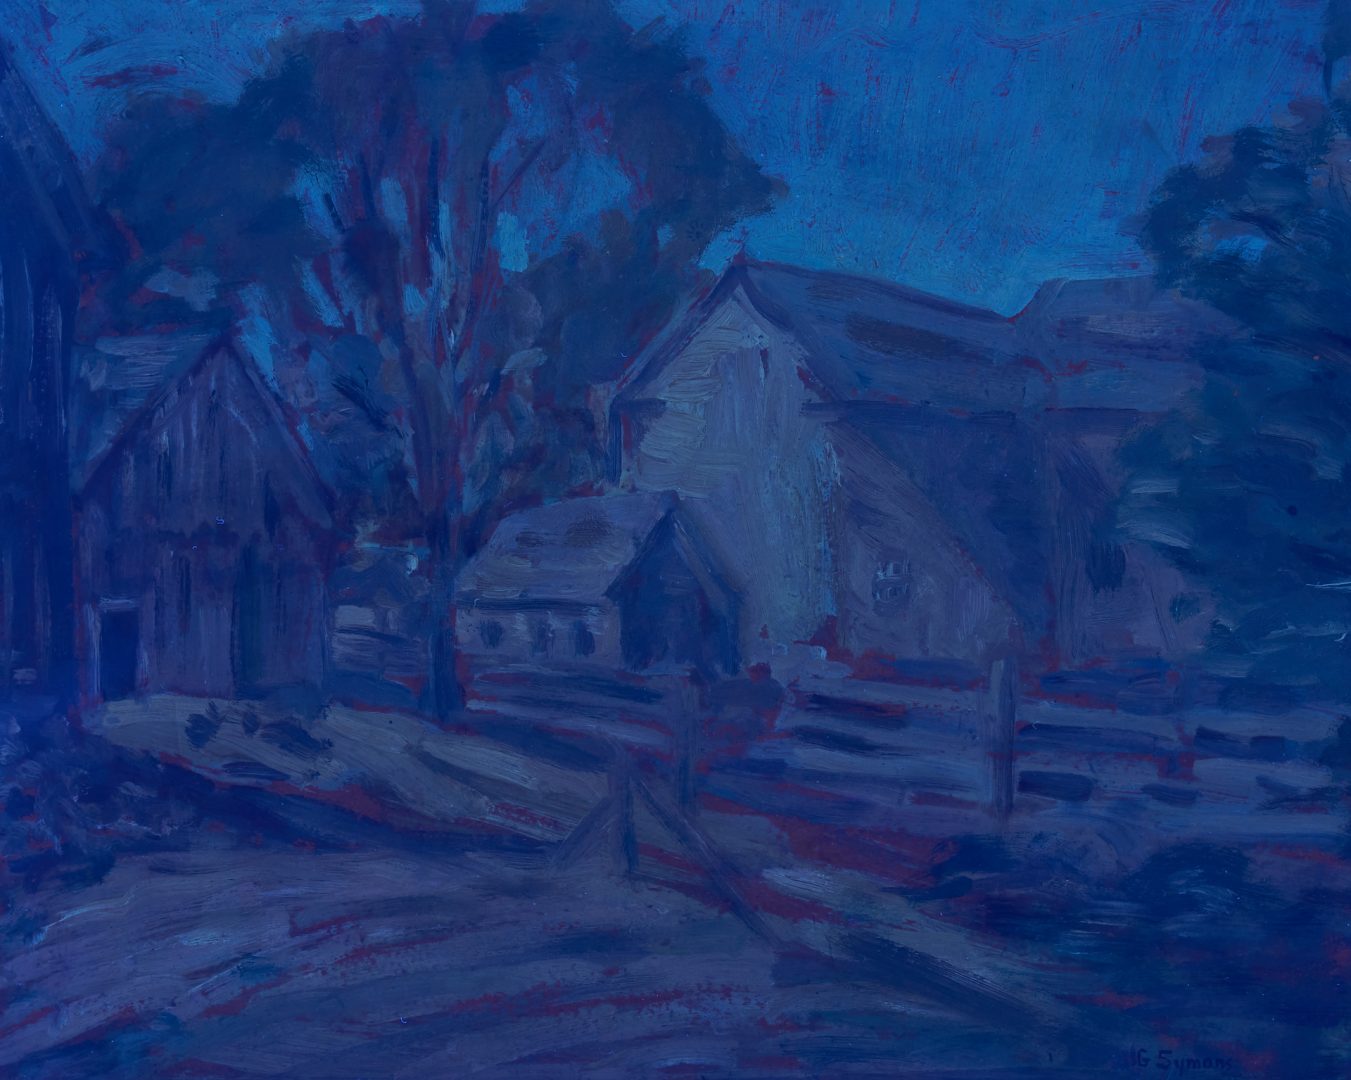 Lot 337: G. Symons O/B Landscape with Barn